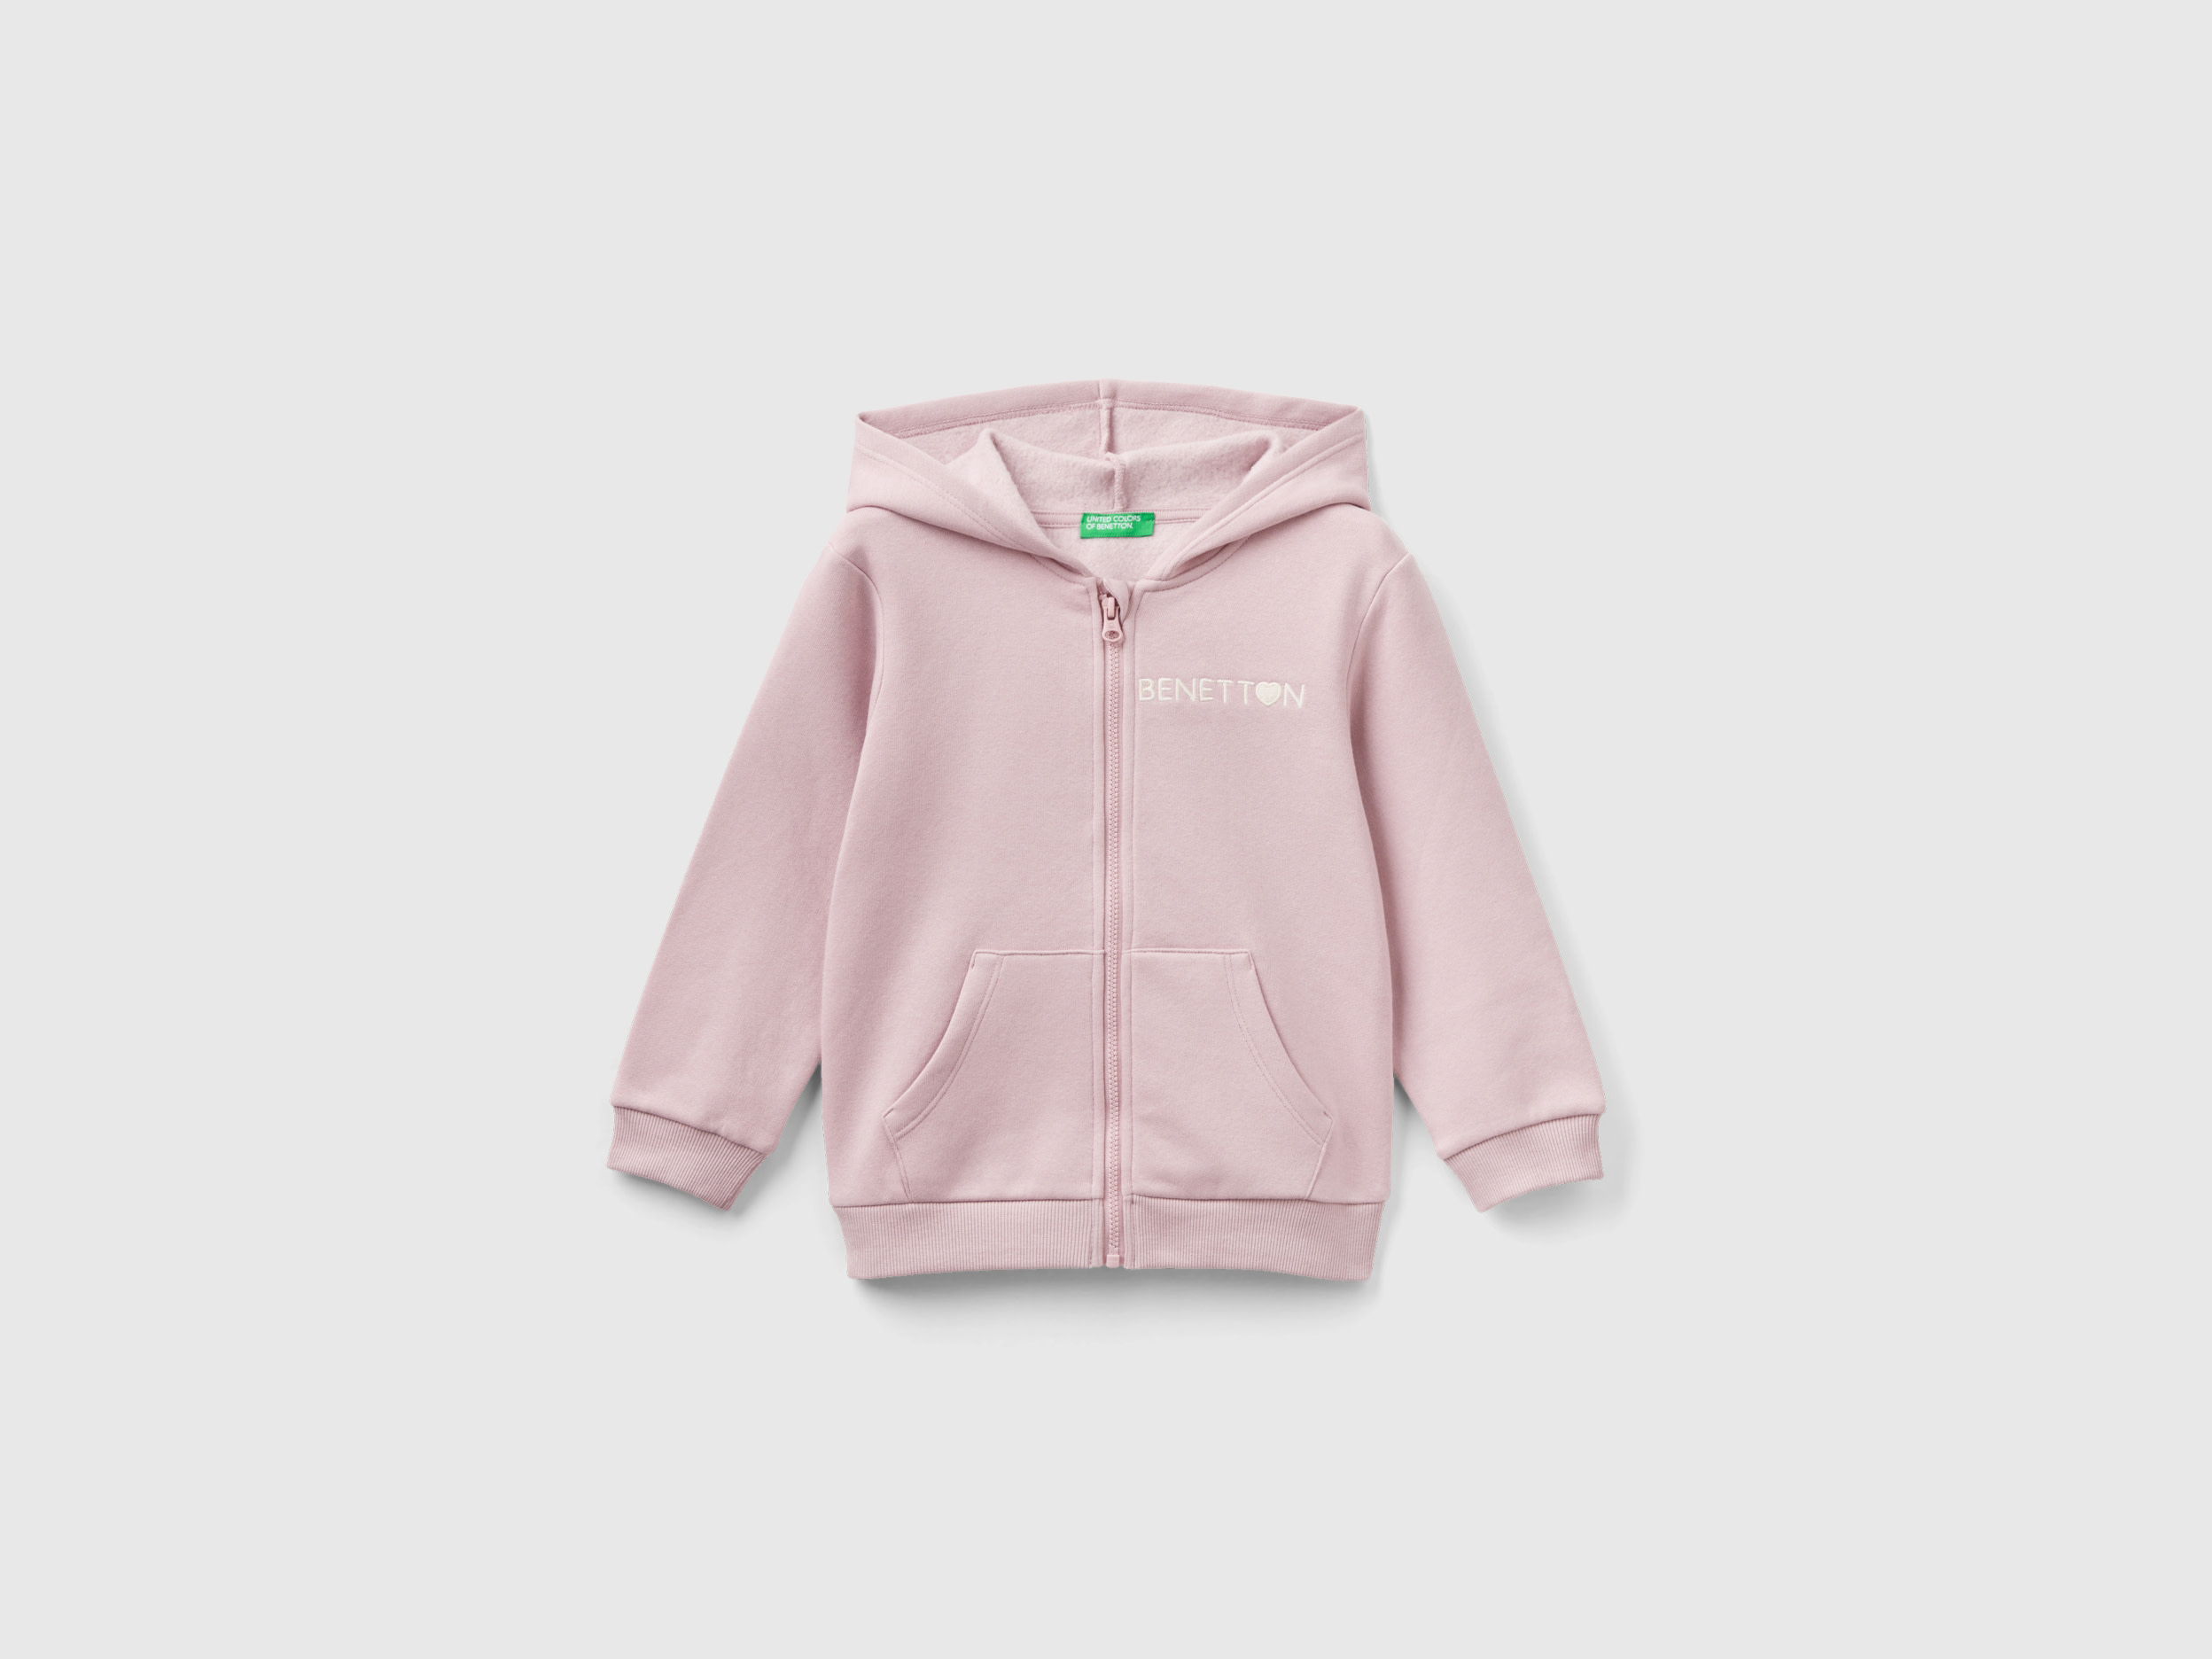 Benetton, Zip-up Sweatshirt In Cotton Blend, size 5-6, Pink, Kids